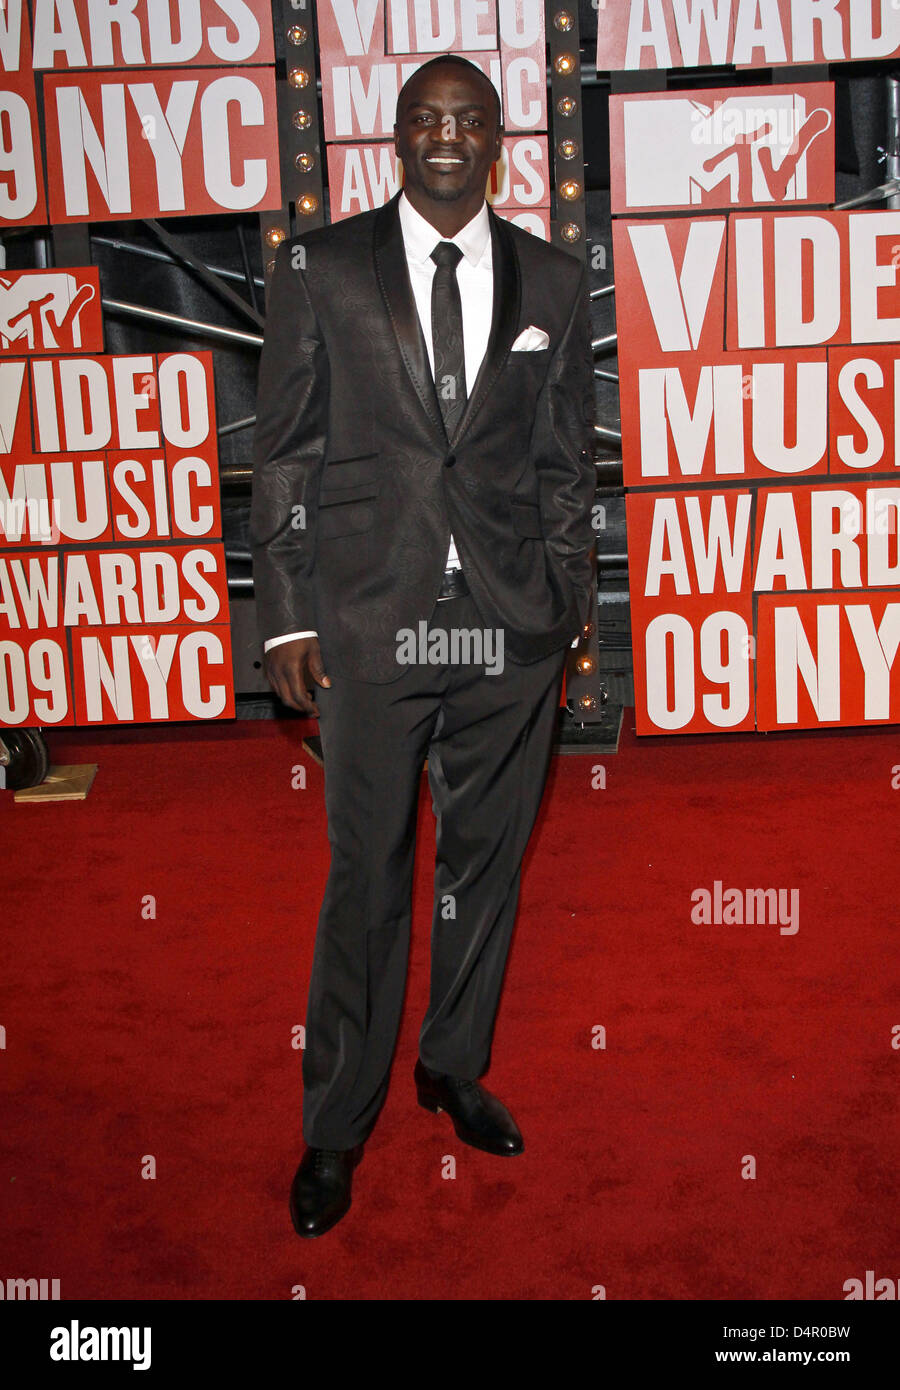 US musician Akon arrives for the MTV Video Music Awards at Radio City Music Hall in New York, USA, 13 September 2009. Photo: Hubert Boesl Stock Photo